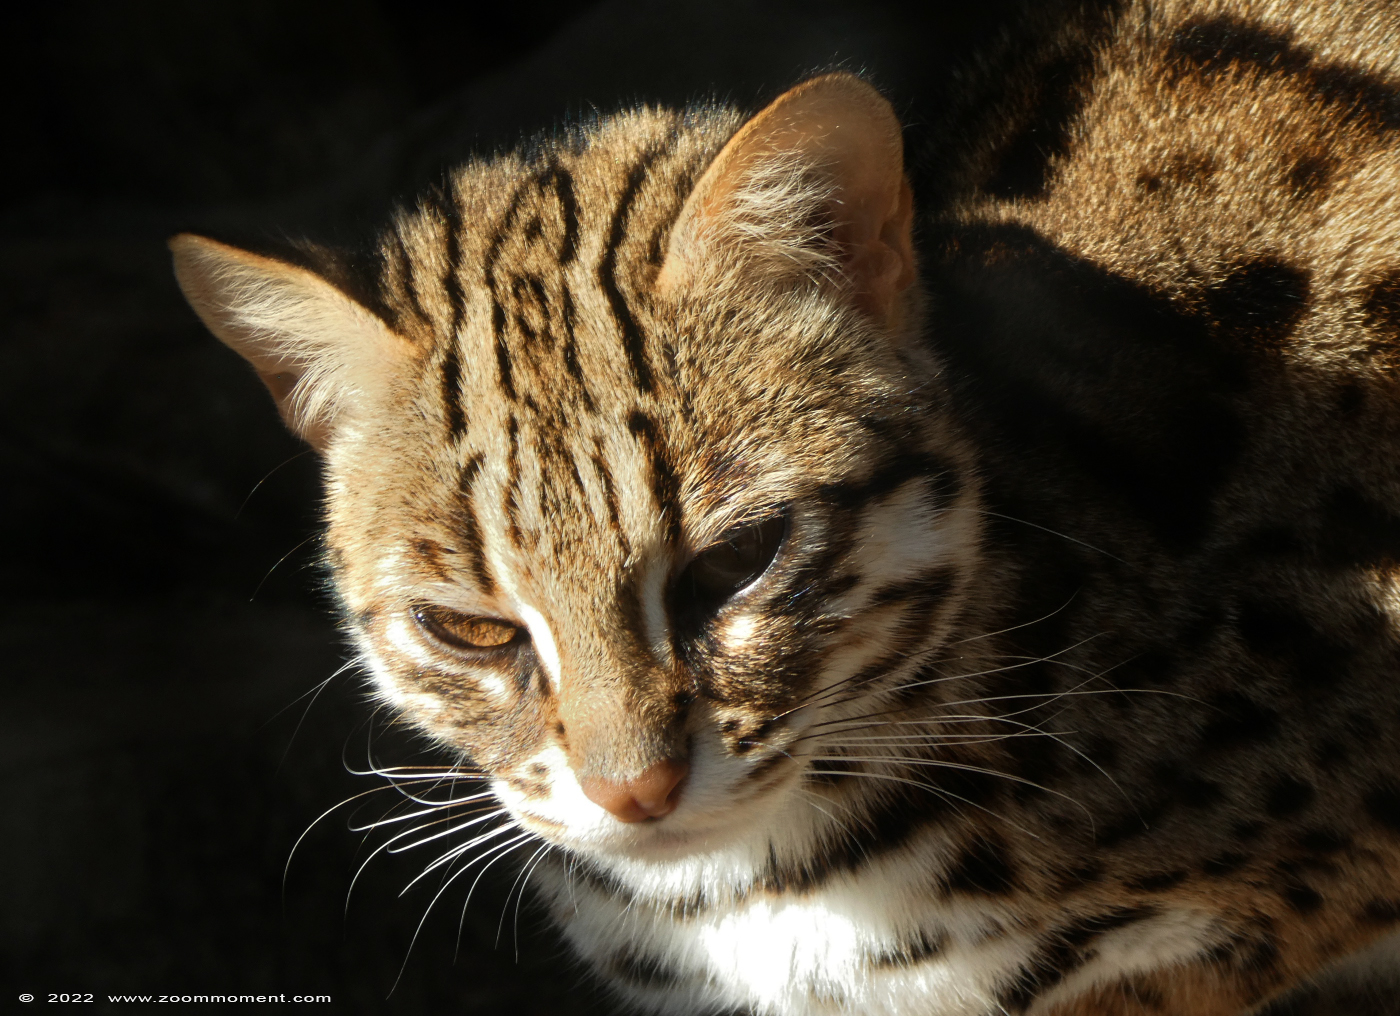 Bengaalse tijgerkat ( Prionailurus bengalensis ) leopard cat Bengalkatze
Trefwoorden: Monde Sauvage Belgium Bengaalse tijgerkat Prionailurus bengalensis leopard cat Bengalkatze